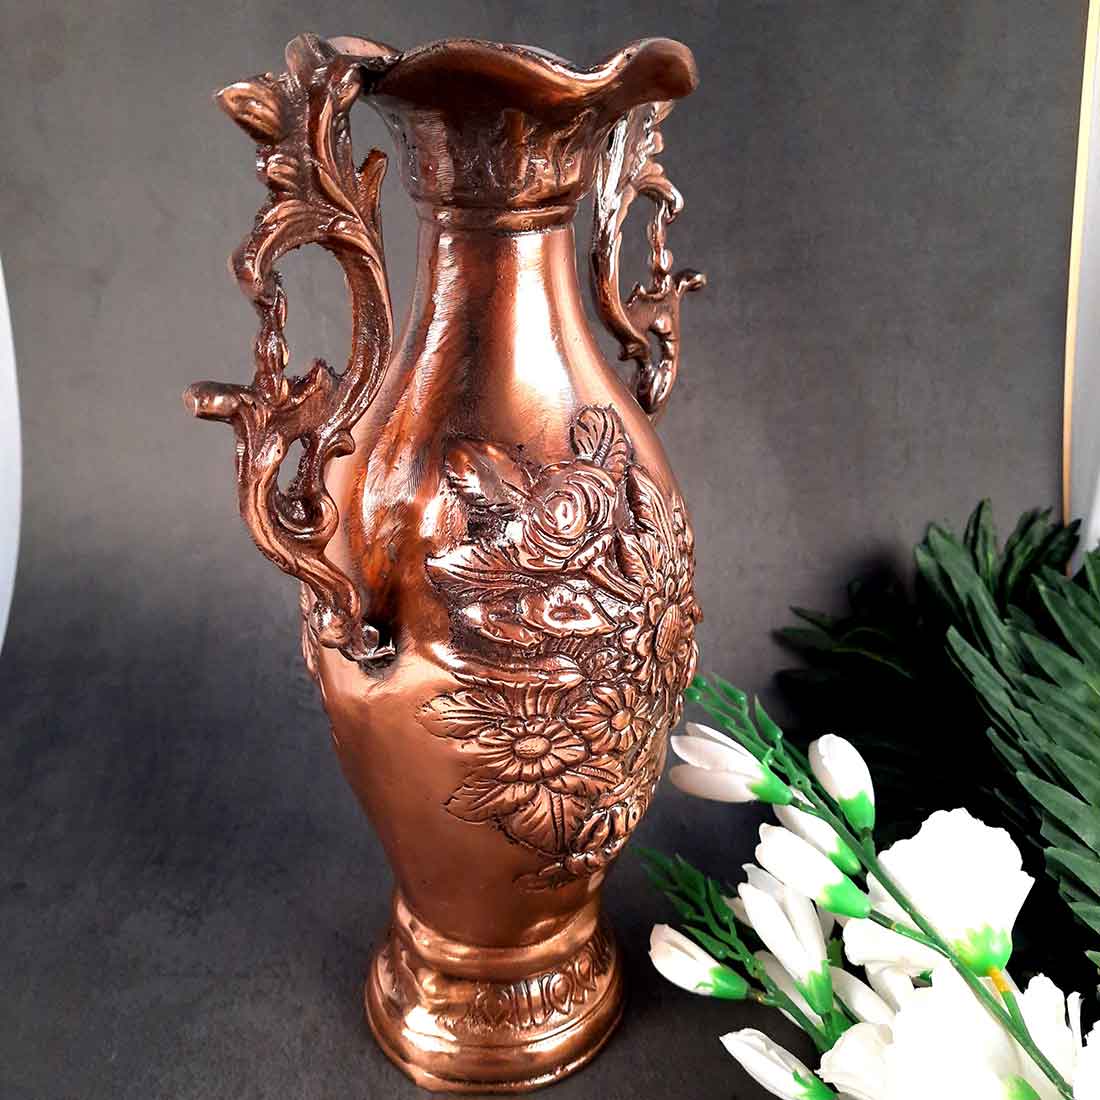 Decorative Indoor Flower Pots - For Home Decor & Gifts - 14 Inch - ApkaMart